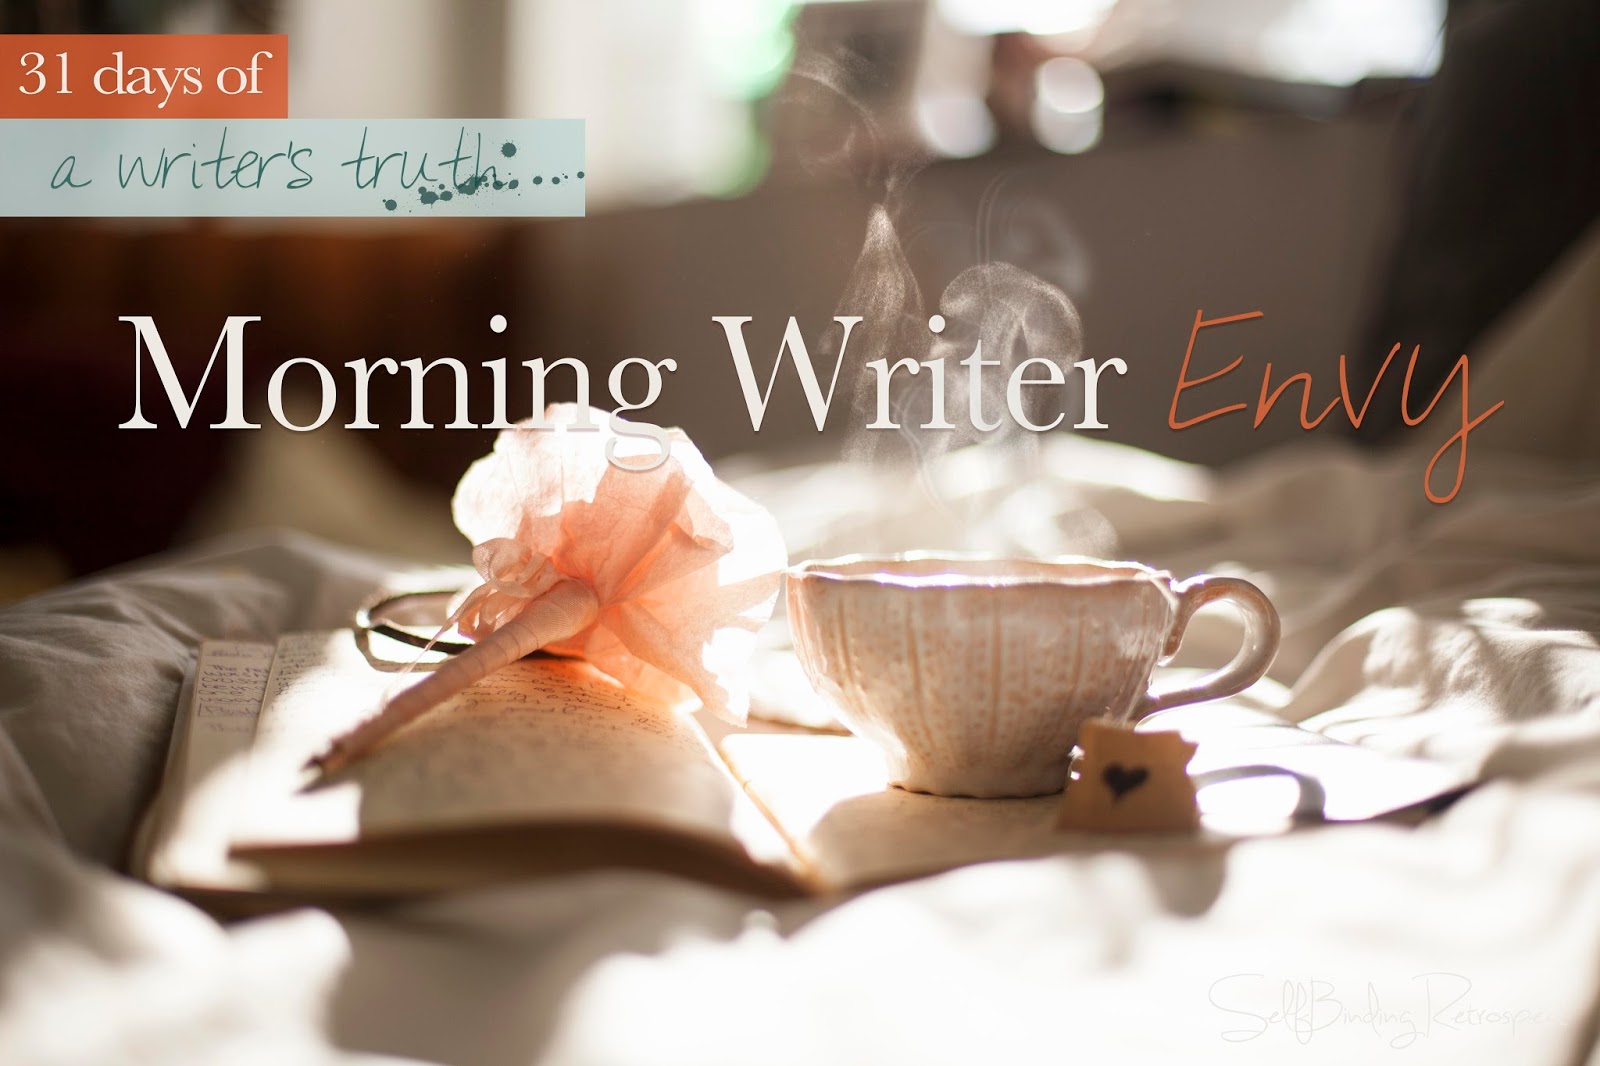 Morning writer envy #write31days